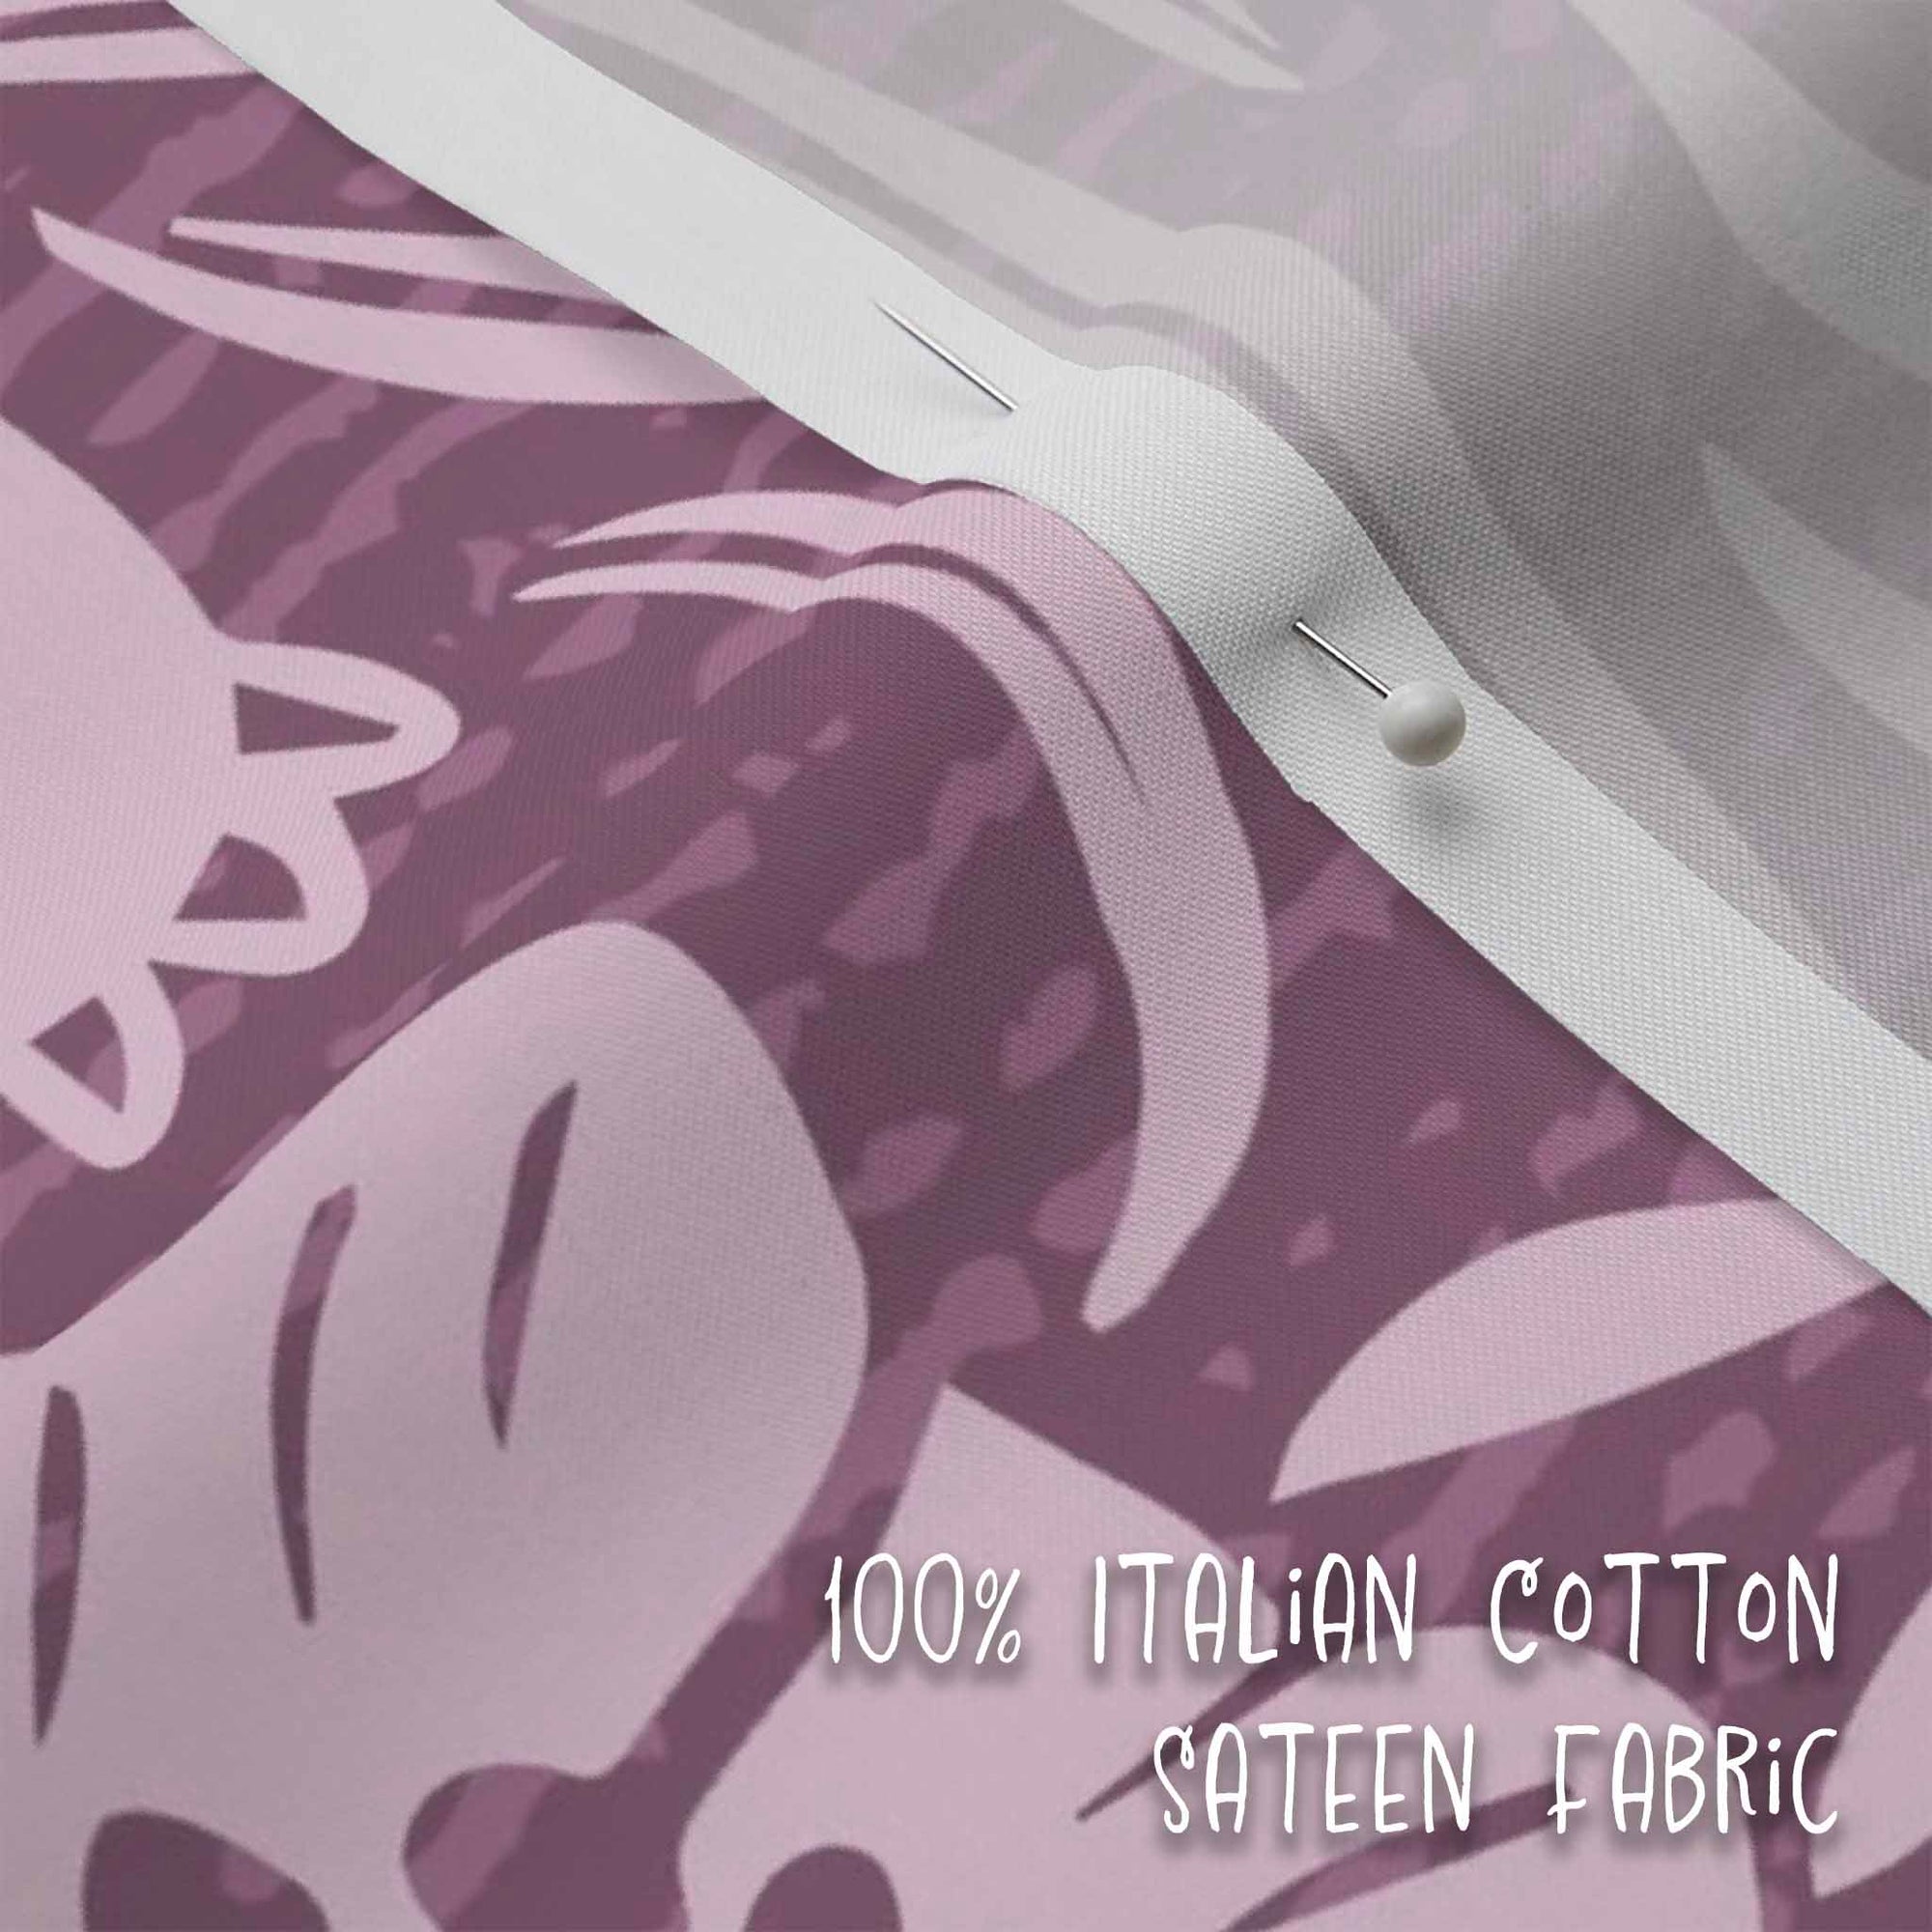 Poppies on purple background 100% Italian Sateen Cotton Duvet Cover detail pattern